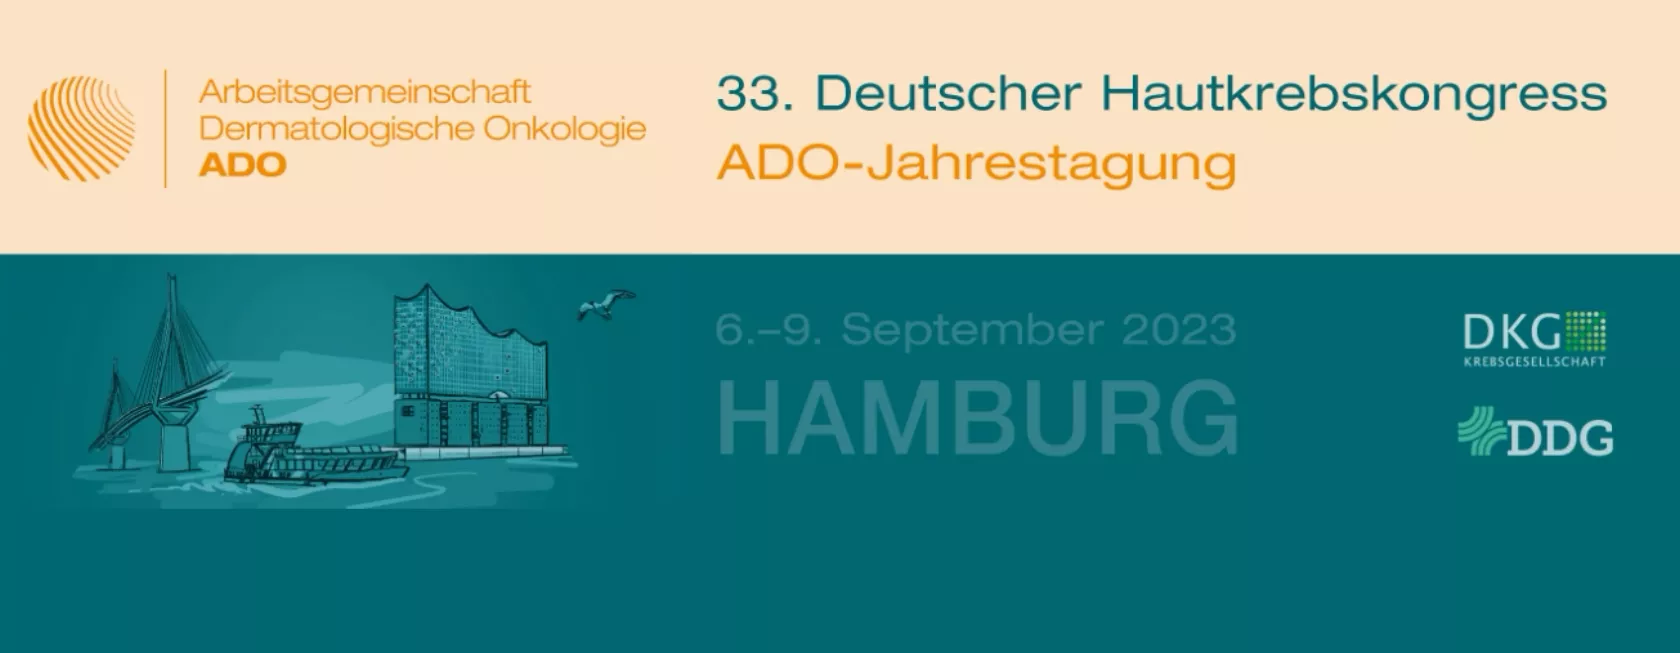 Logo zum ADO-Kongress 2023 in Hamburg.